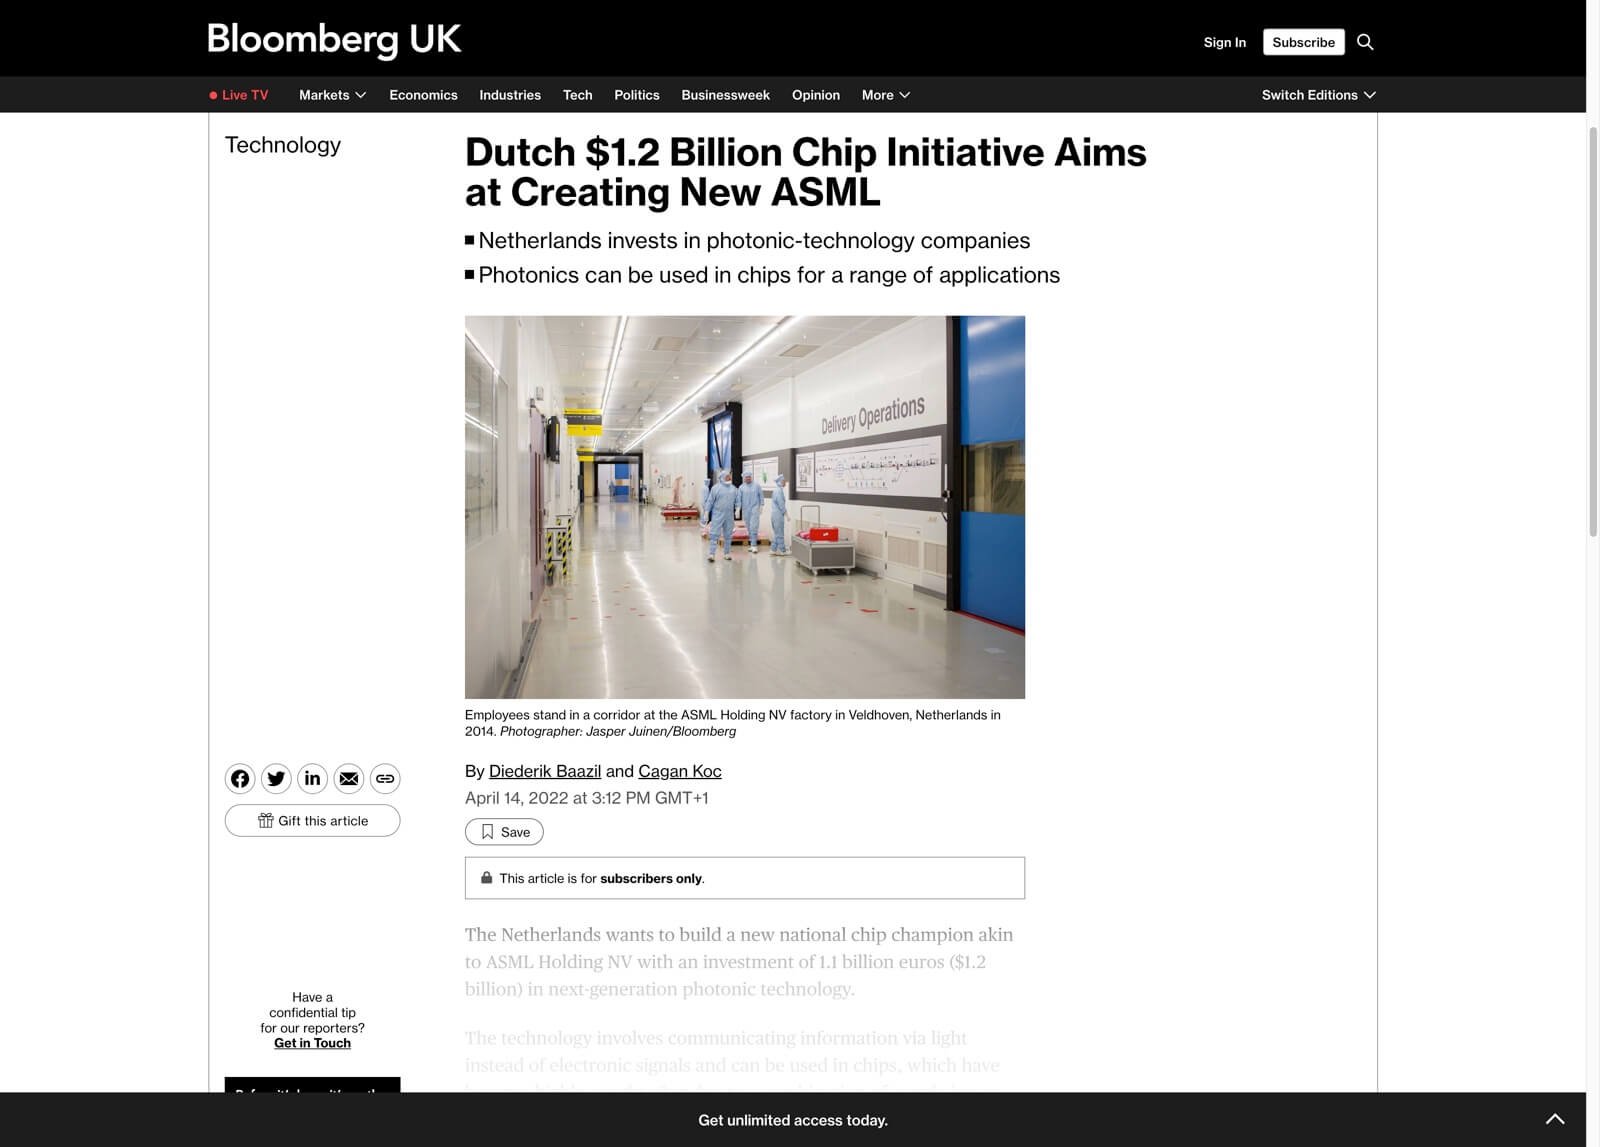 Bloomberg-UK-Dutch-1-2-Billion-Chip-Initiative-Aims-at-Creating-New-ASML-Bloomberg.jpg